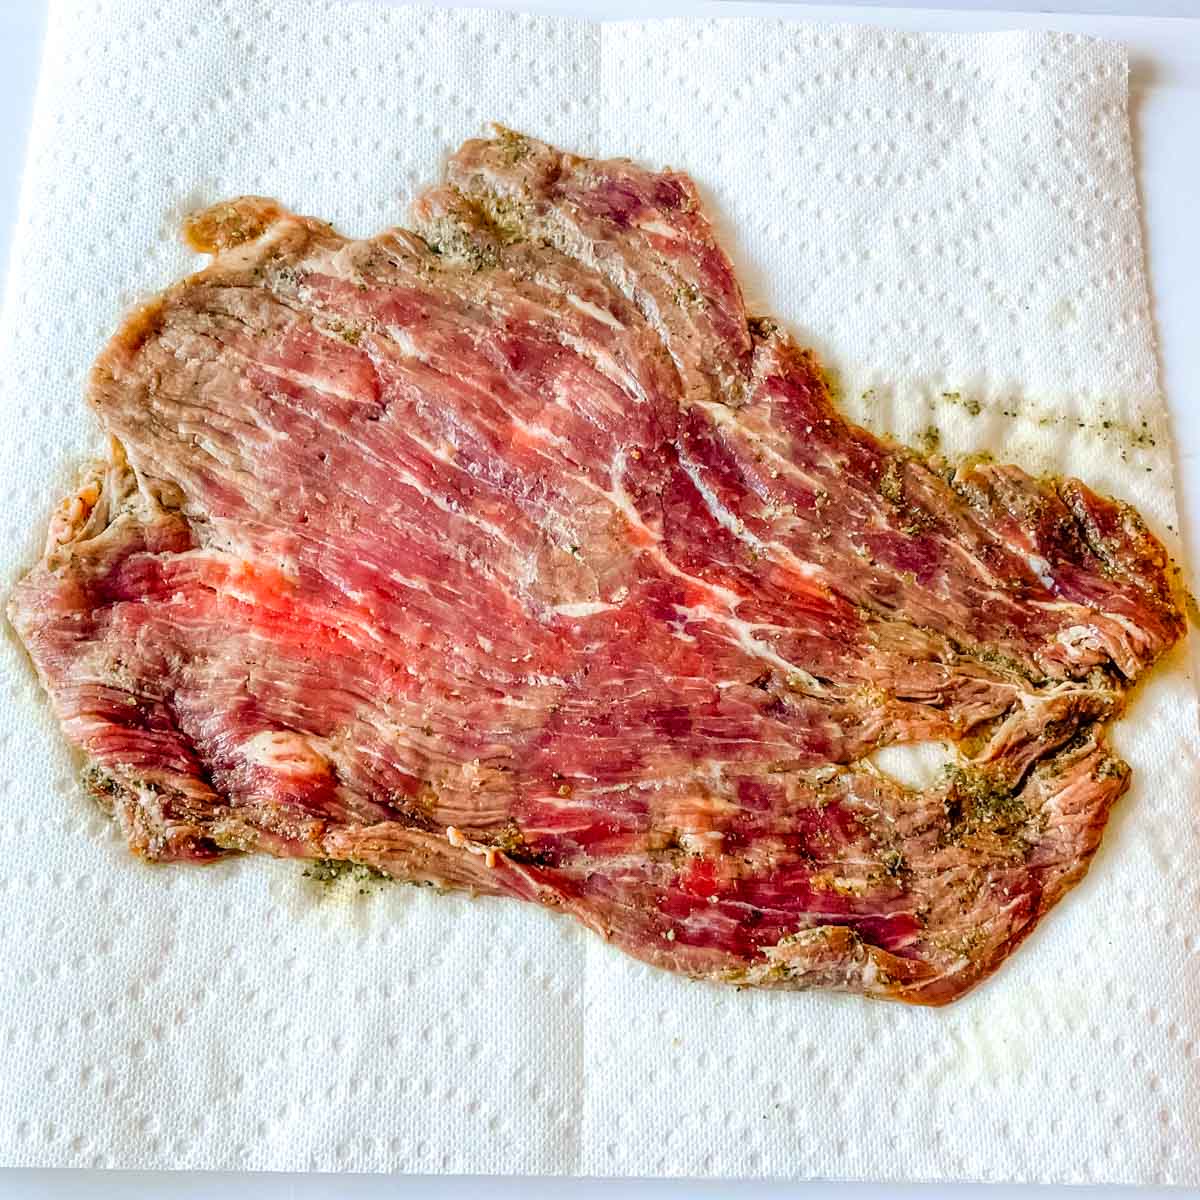 Marinated carne asada on a paper towel.